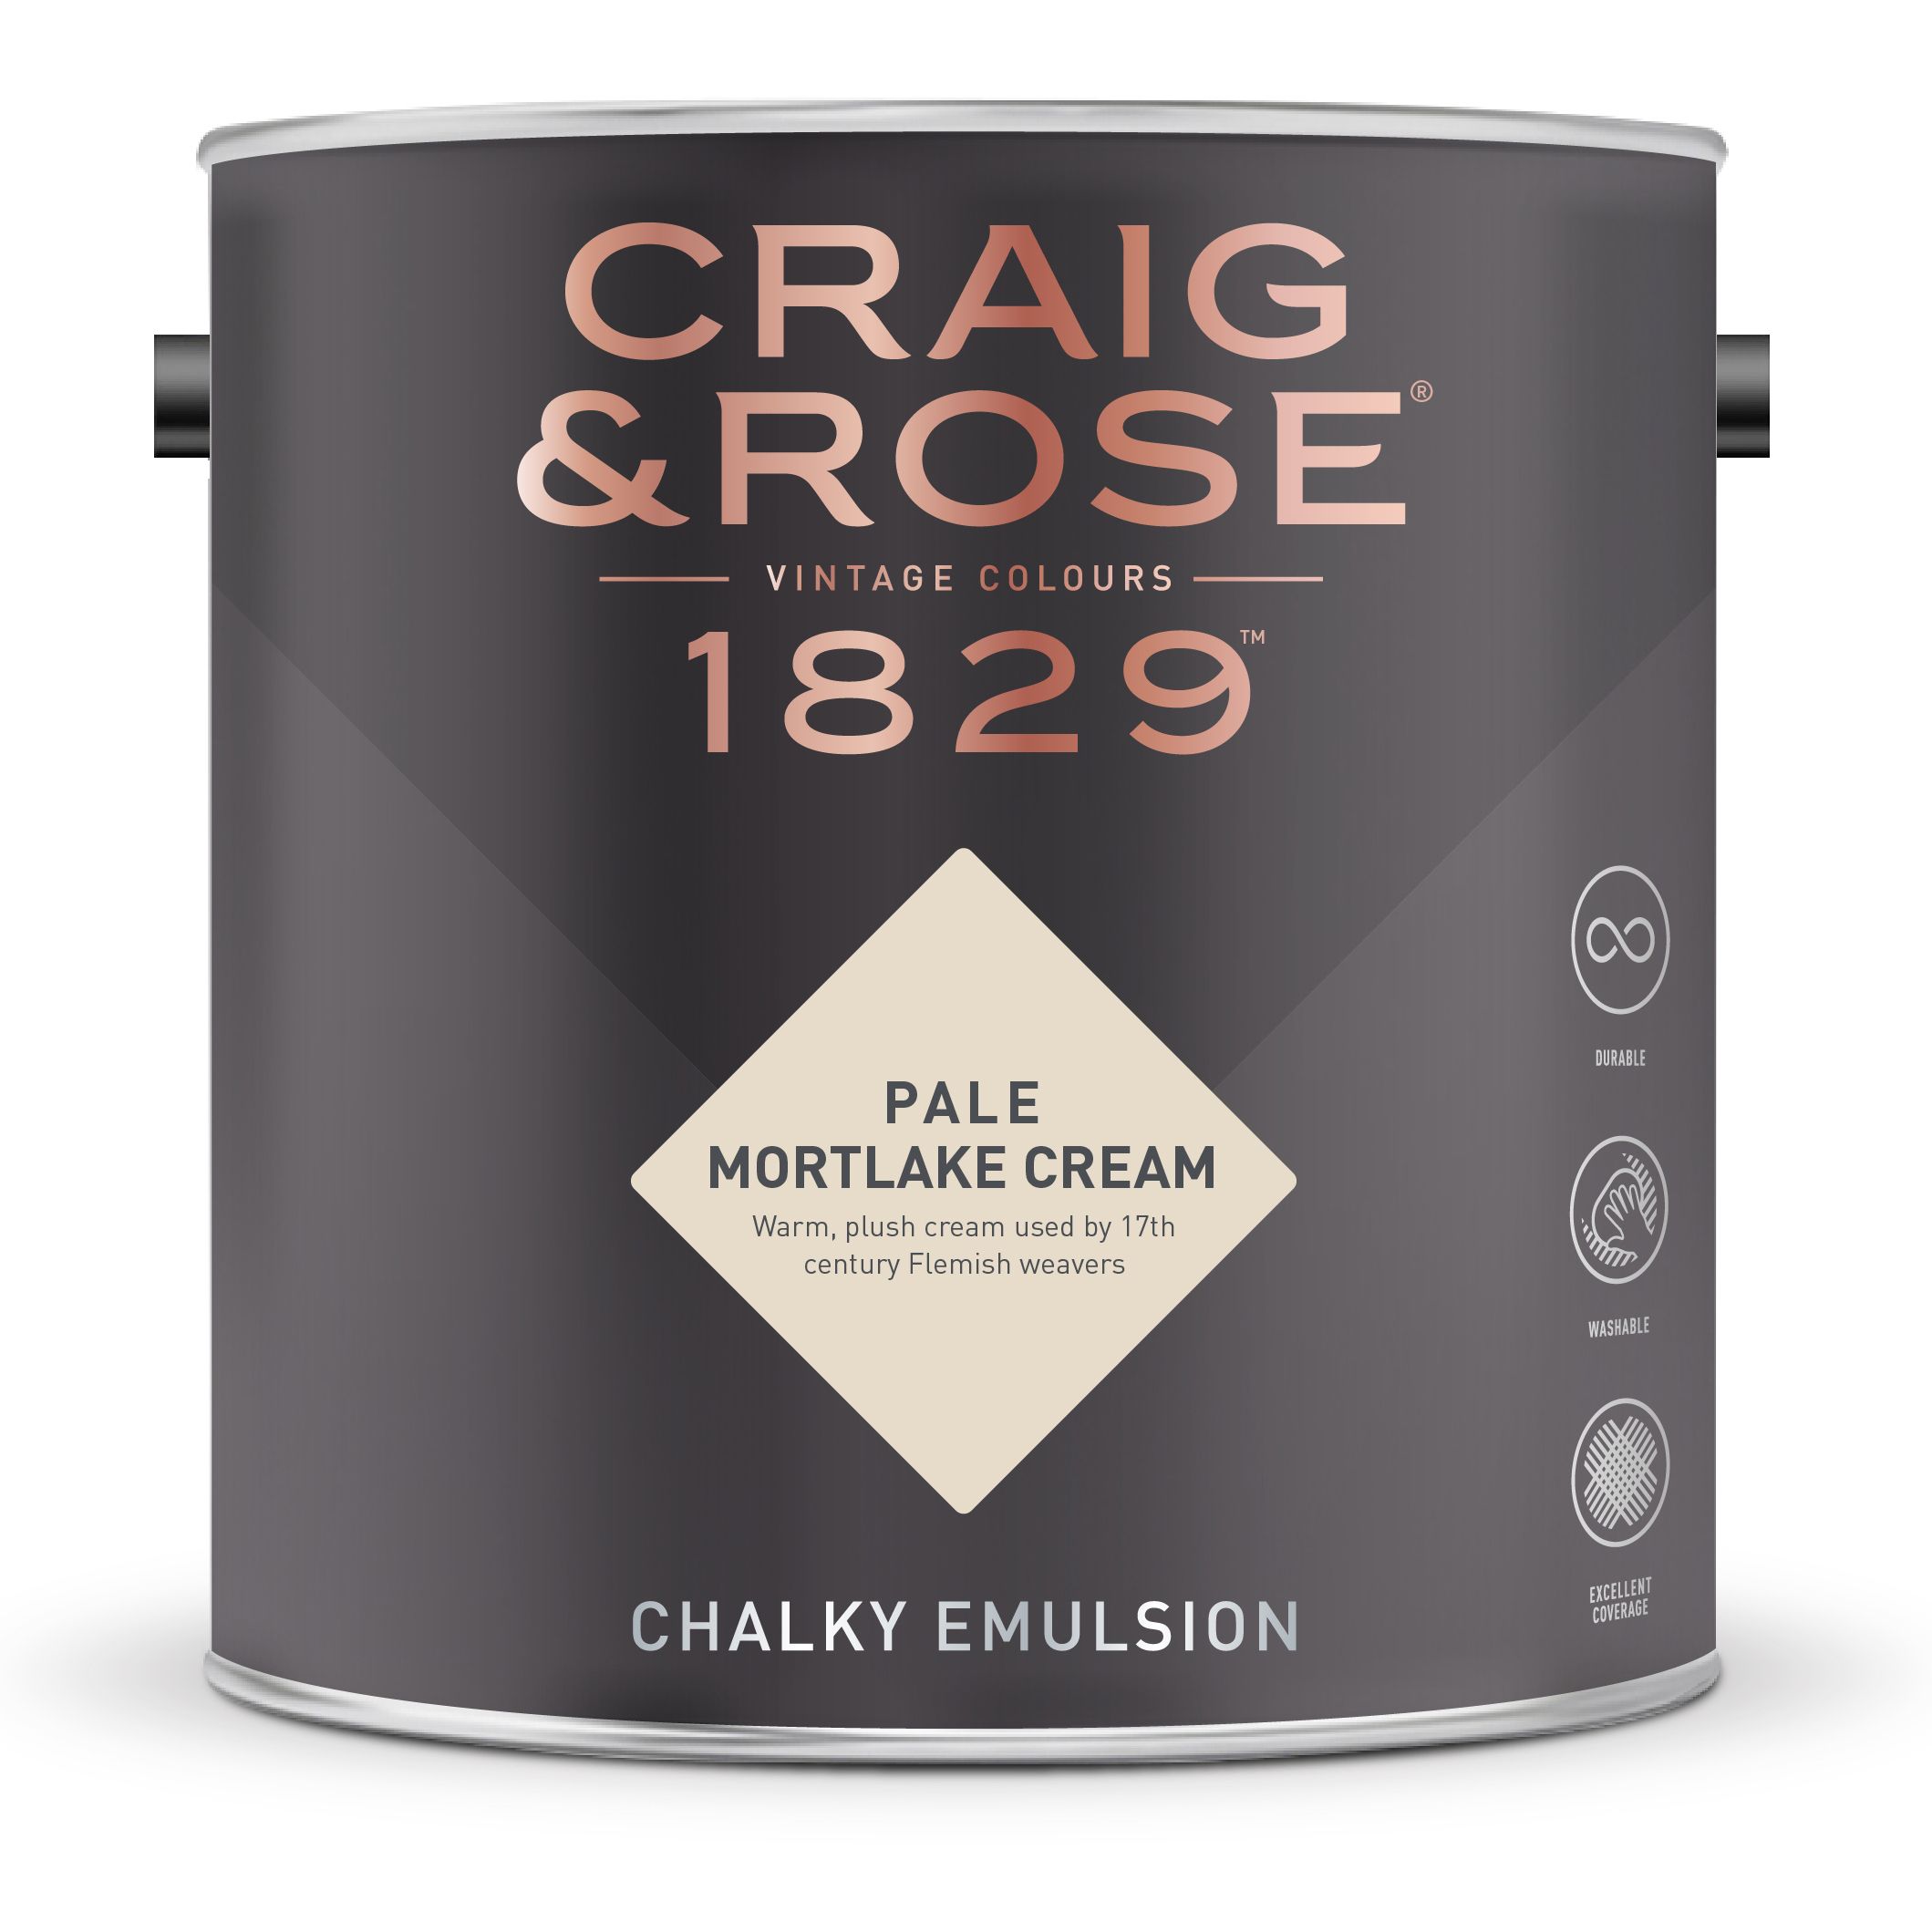 Craig & Rose 1829 Pale Mortlake Crm Chalky Emulsion paint, 2.5L